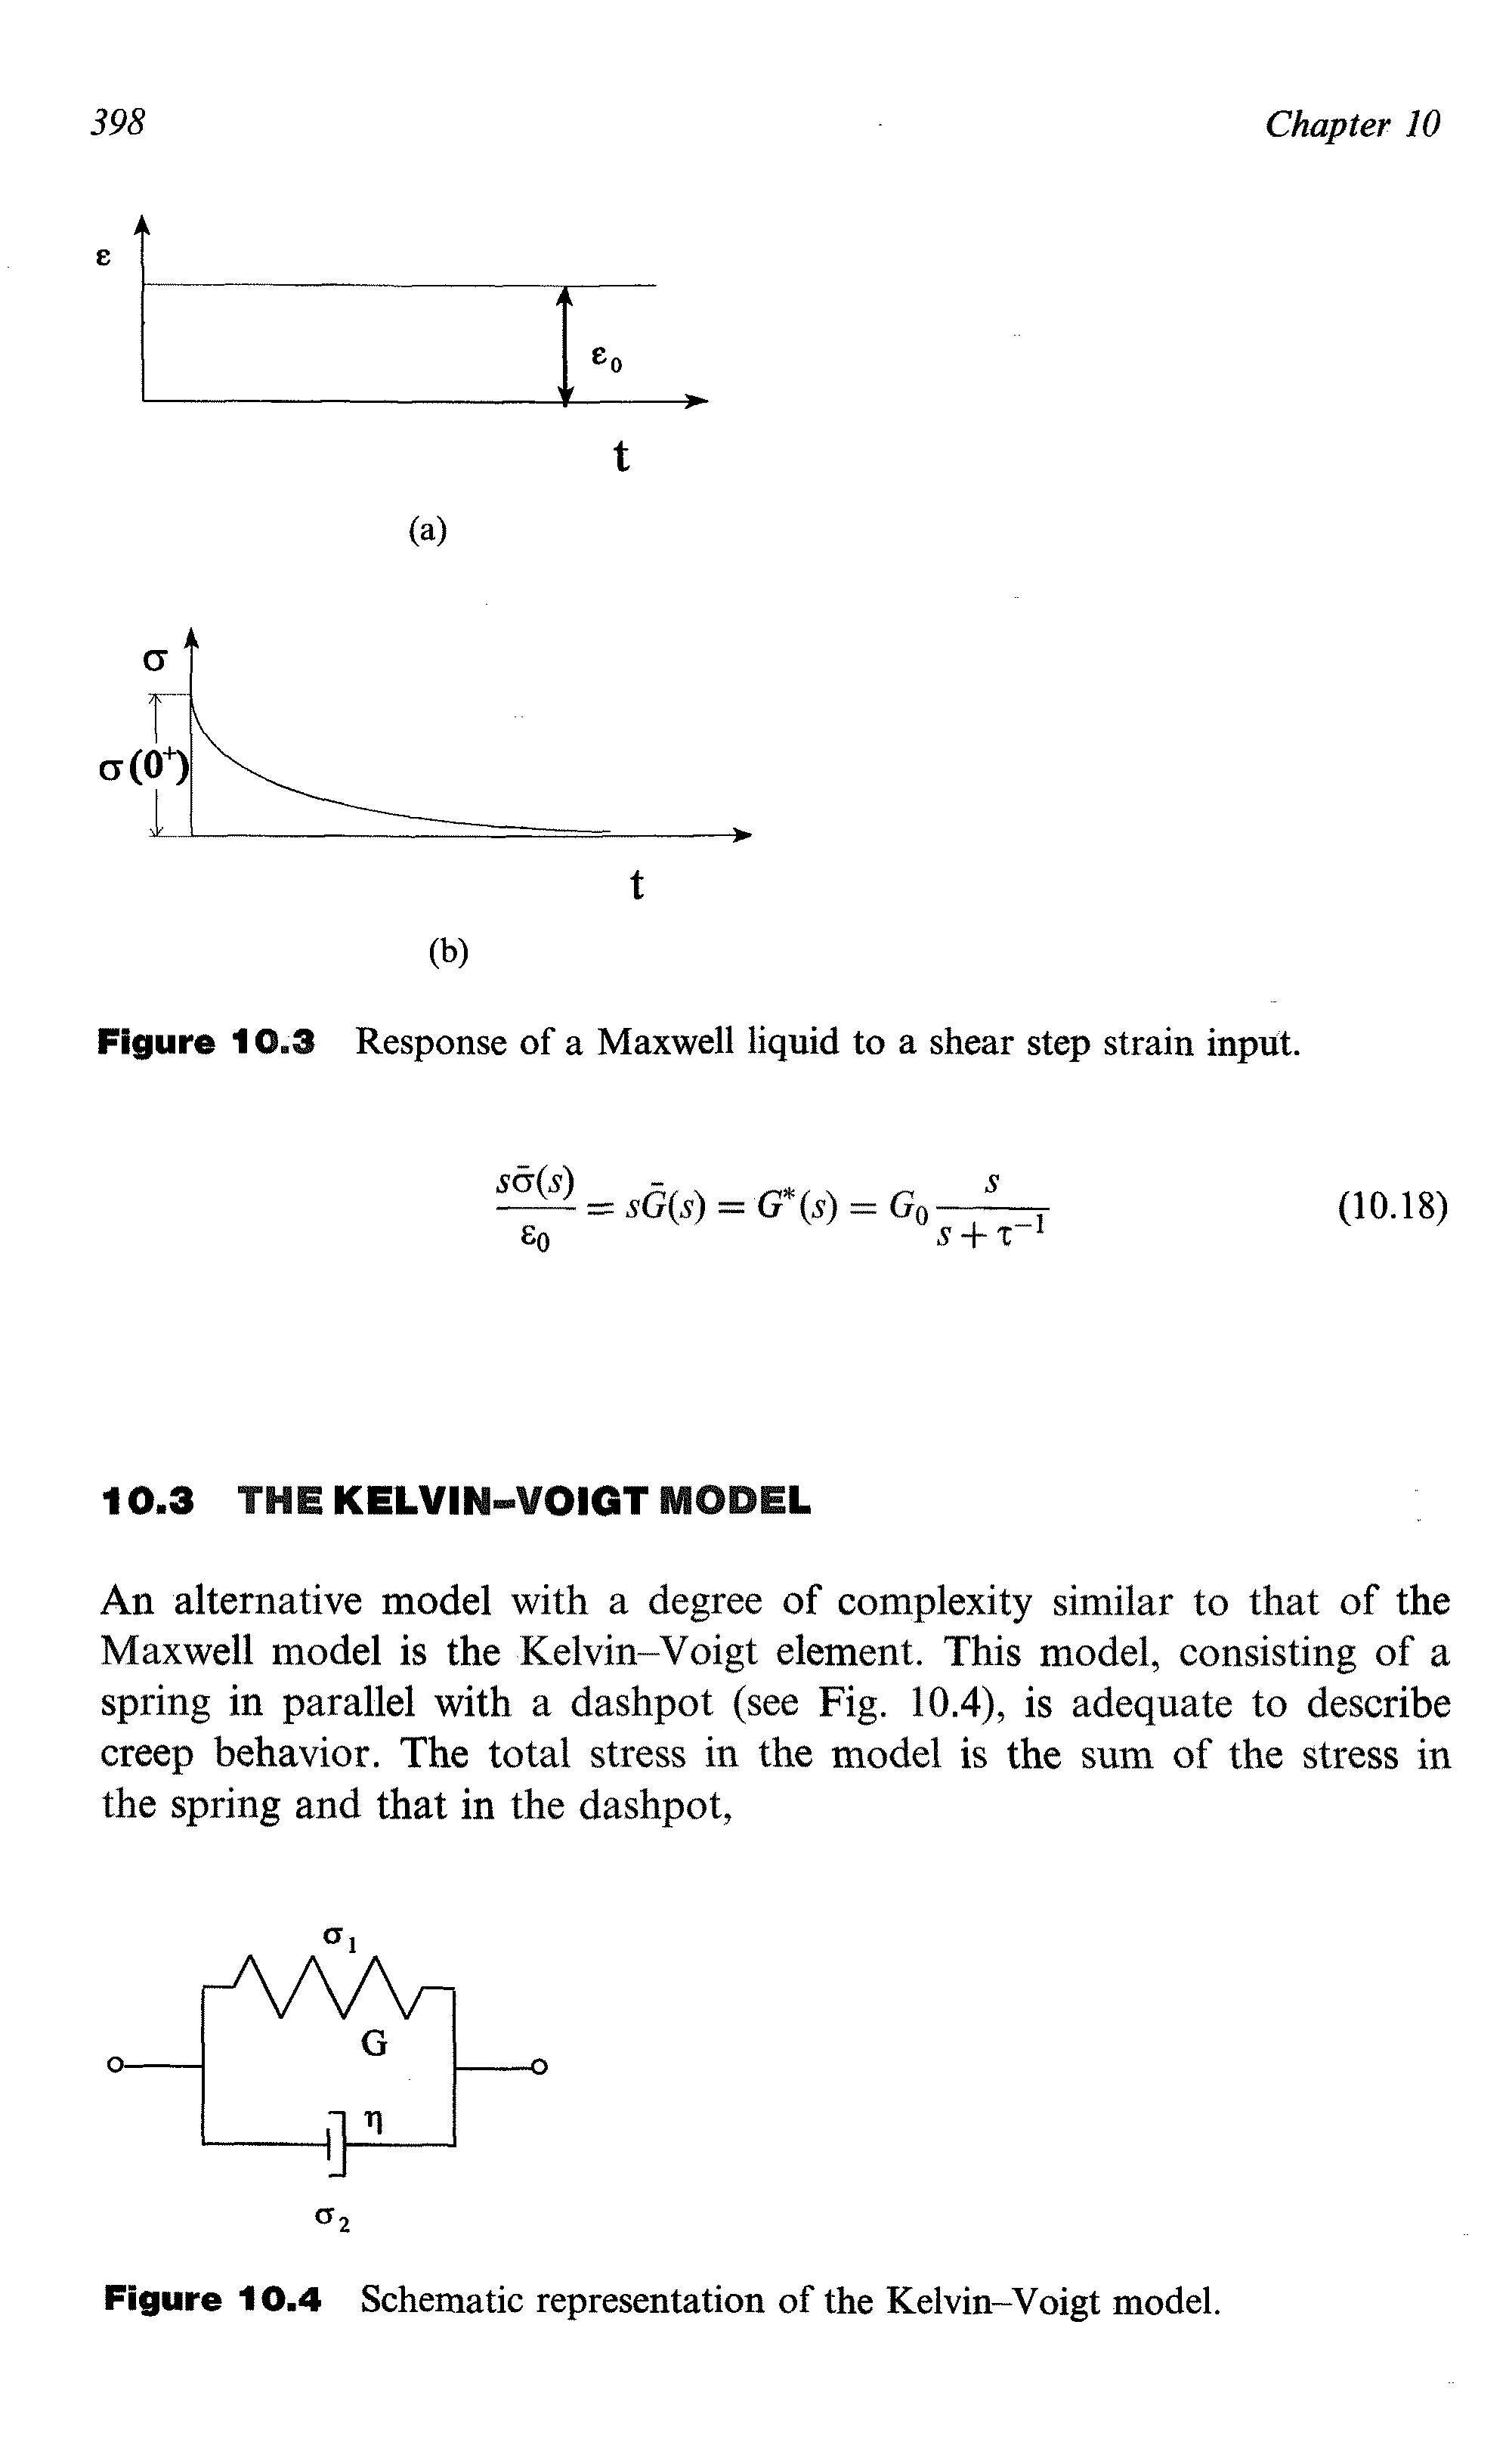 Figure 10.3 Response of a Maxwell liquid to a shear step strain input.